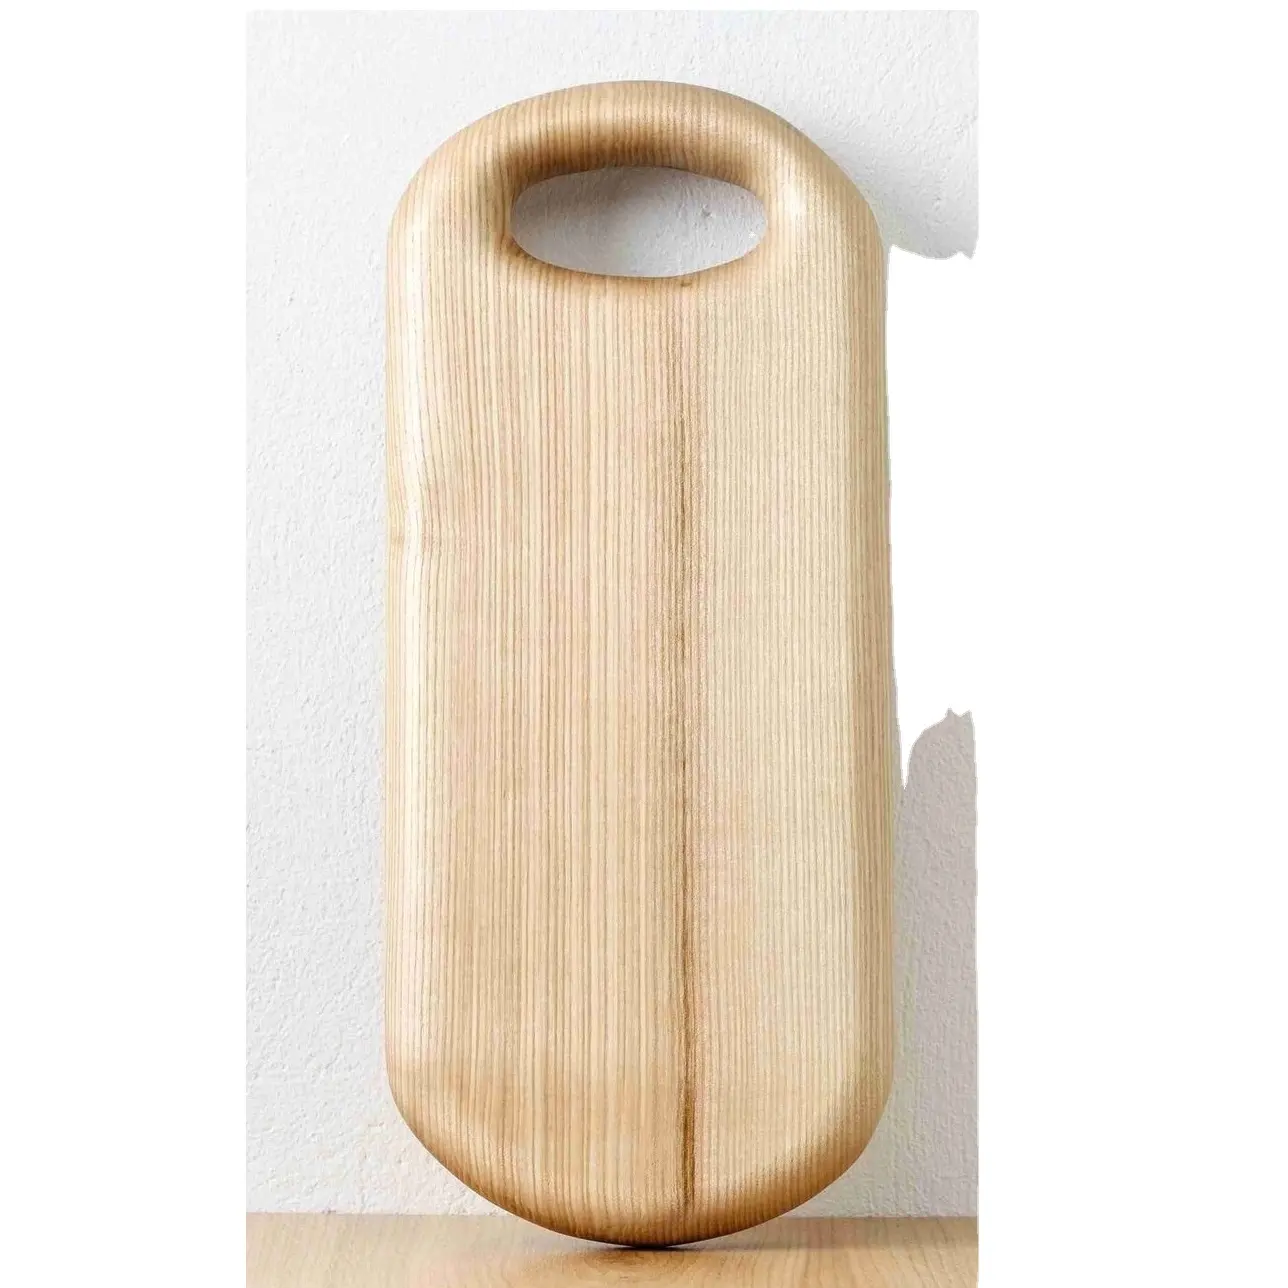 Tabla de cortar con mango redondo de forma ovalada Lisa para cortar madera de bambú más vendida en acabado Natural para cocina casera